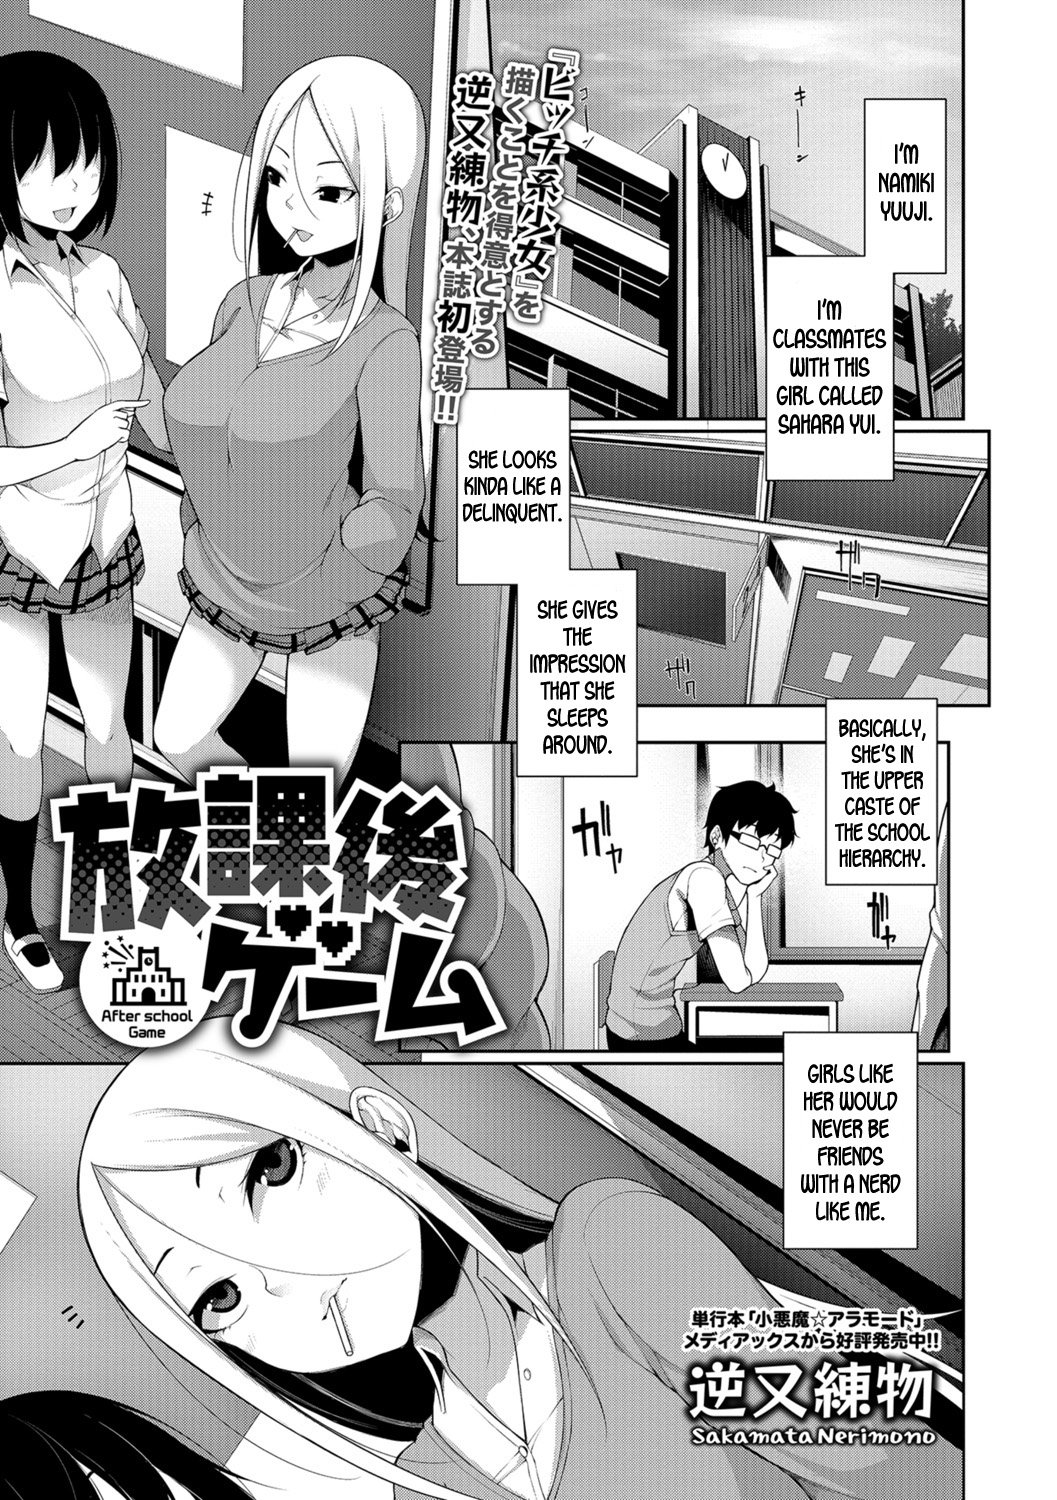 1057px x 1500px - After School Game [Sakamata Nerimono] Porn Comic - AllPornComic